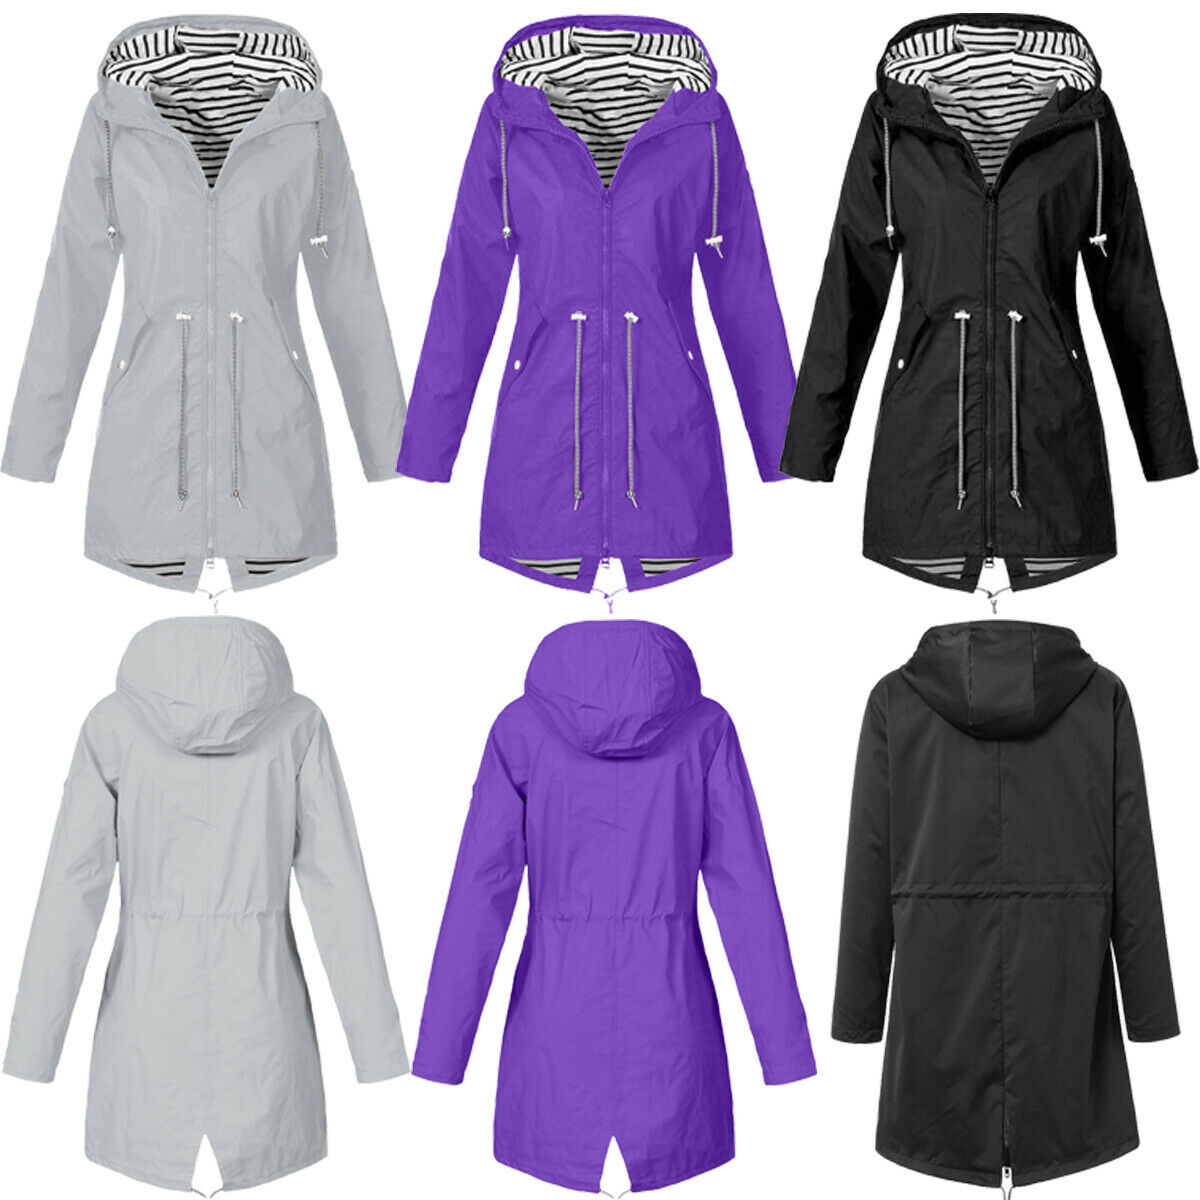 Cathery Women Ladies Raincoat Wind Waterproof Jacket Hooded Rain Mac Outdoor Poncho Coat - image 5 of 5